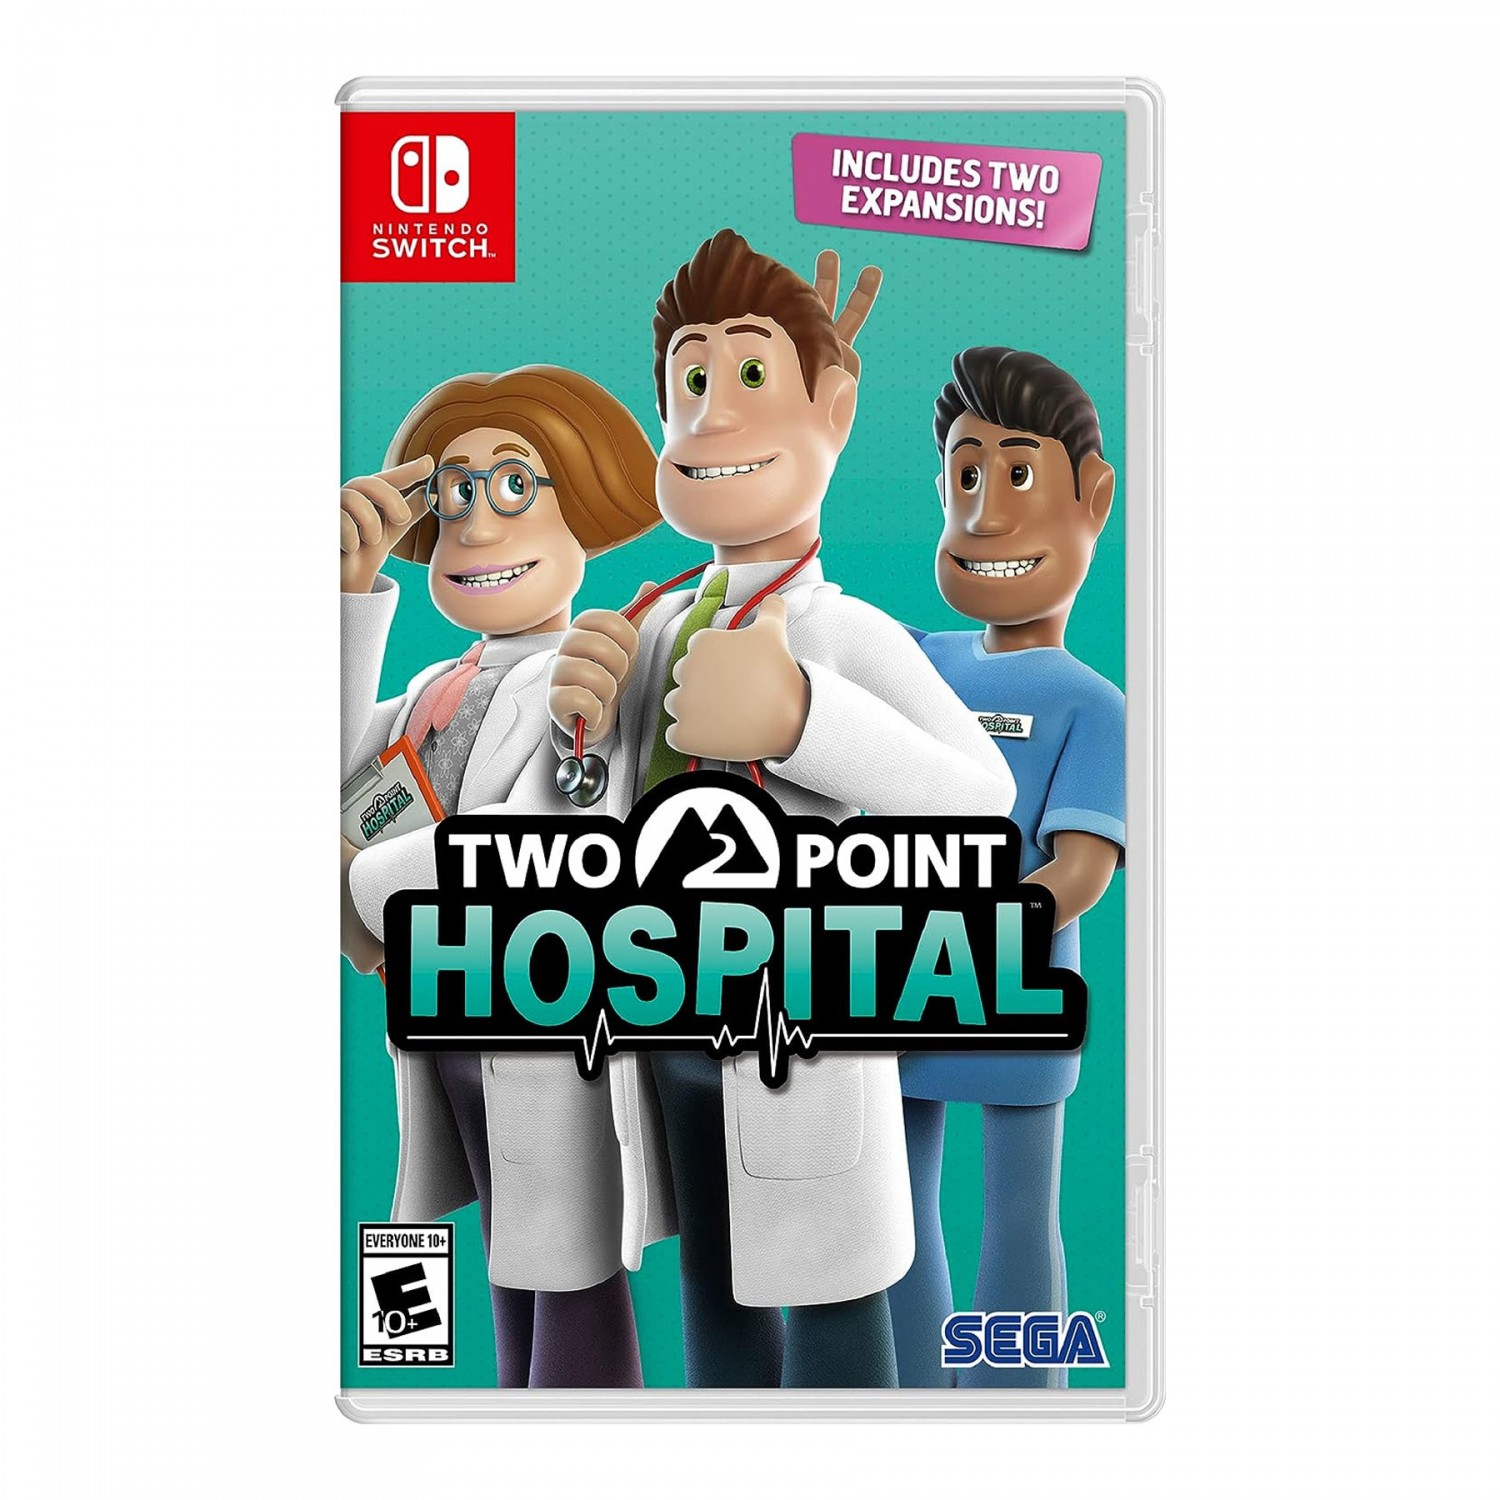 Ø¨Ø§Ø²ÛŒ Two Point Hospital - Nintendo Switch